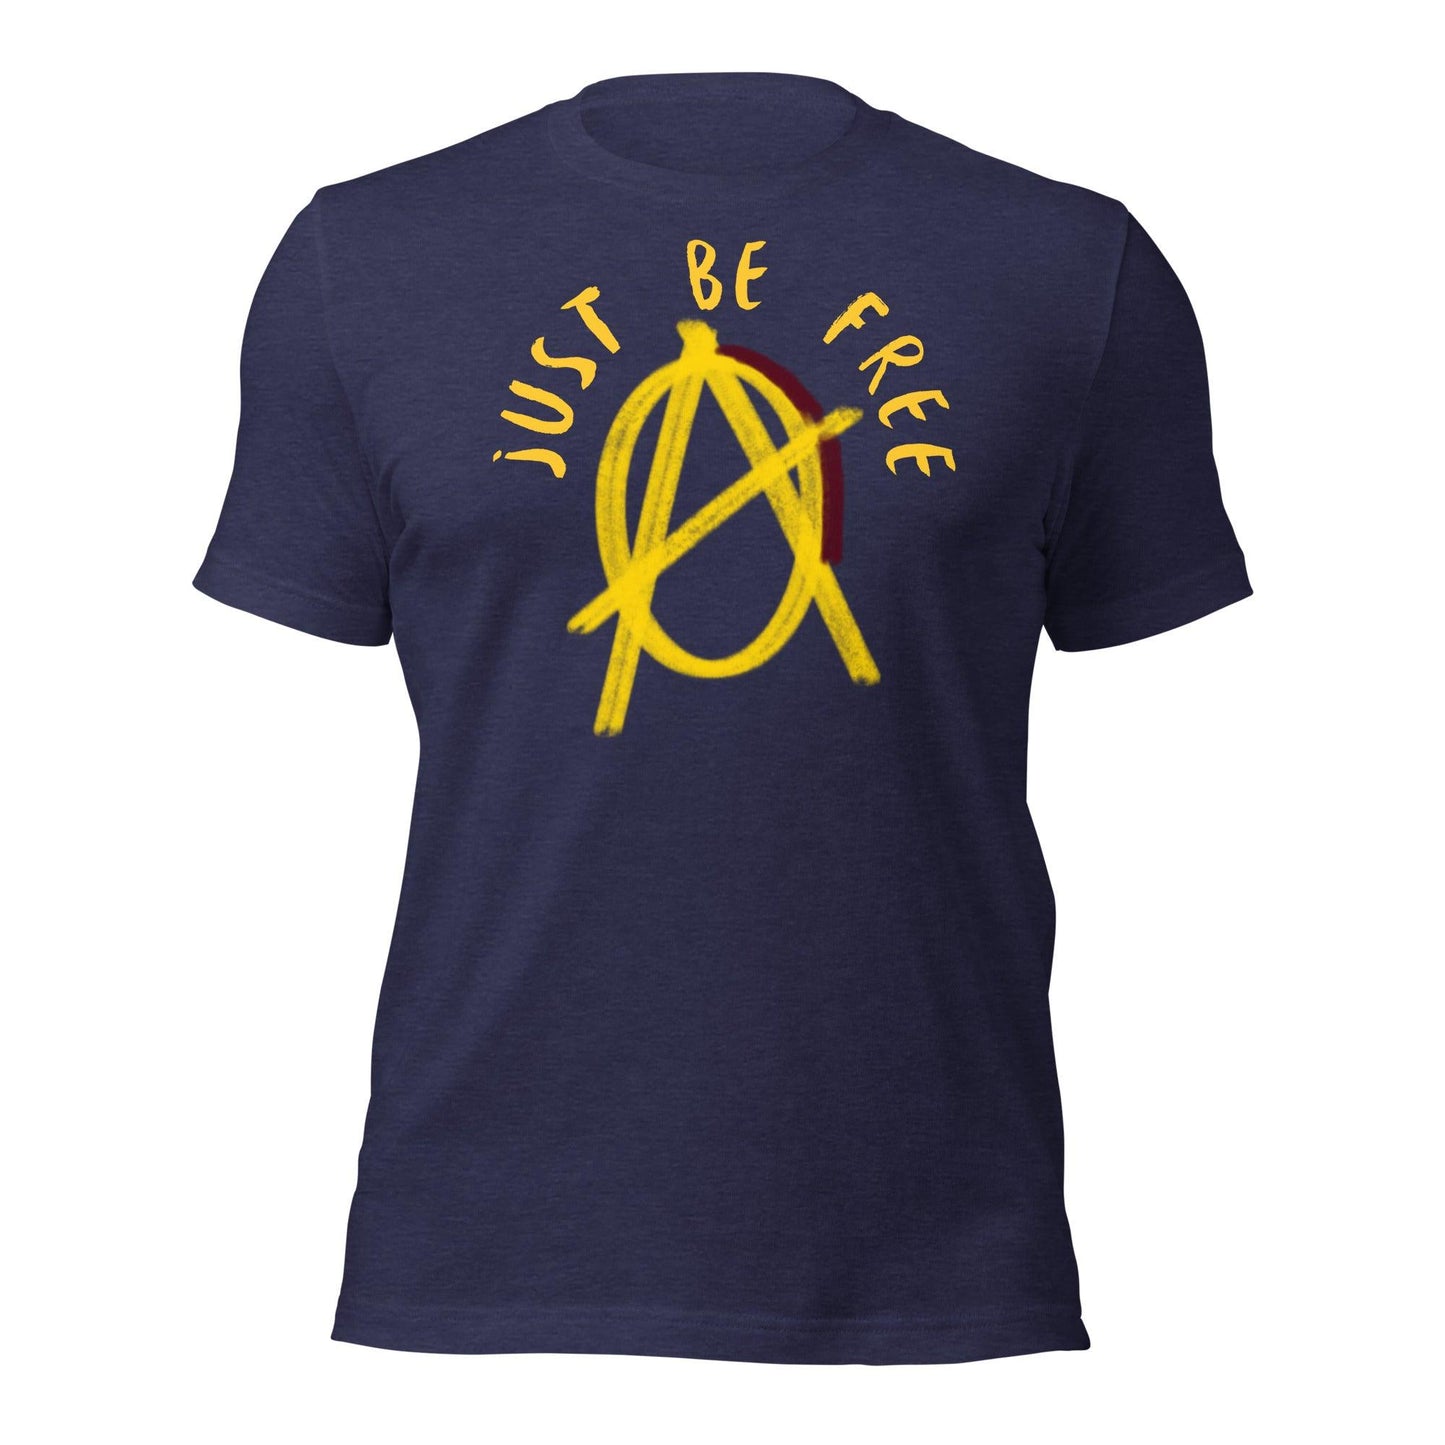 Anarchy Wear "Just Be Free" Unisex t-shirt - AnarchyWear